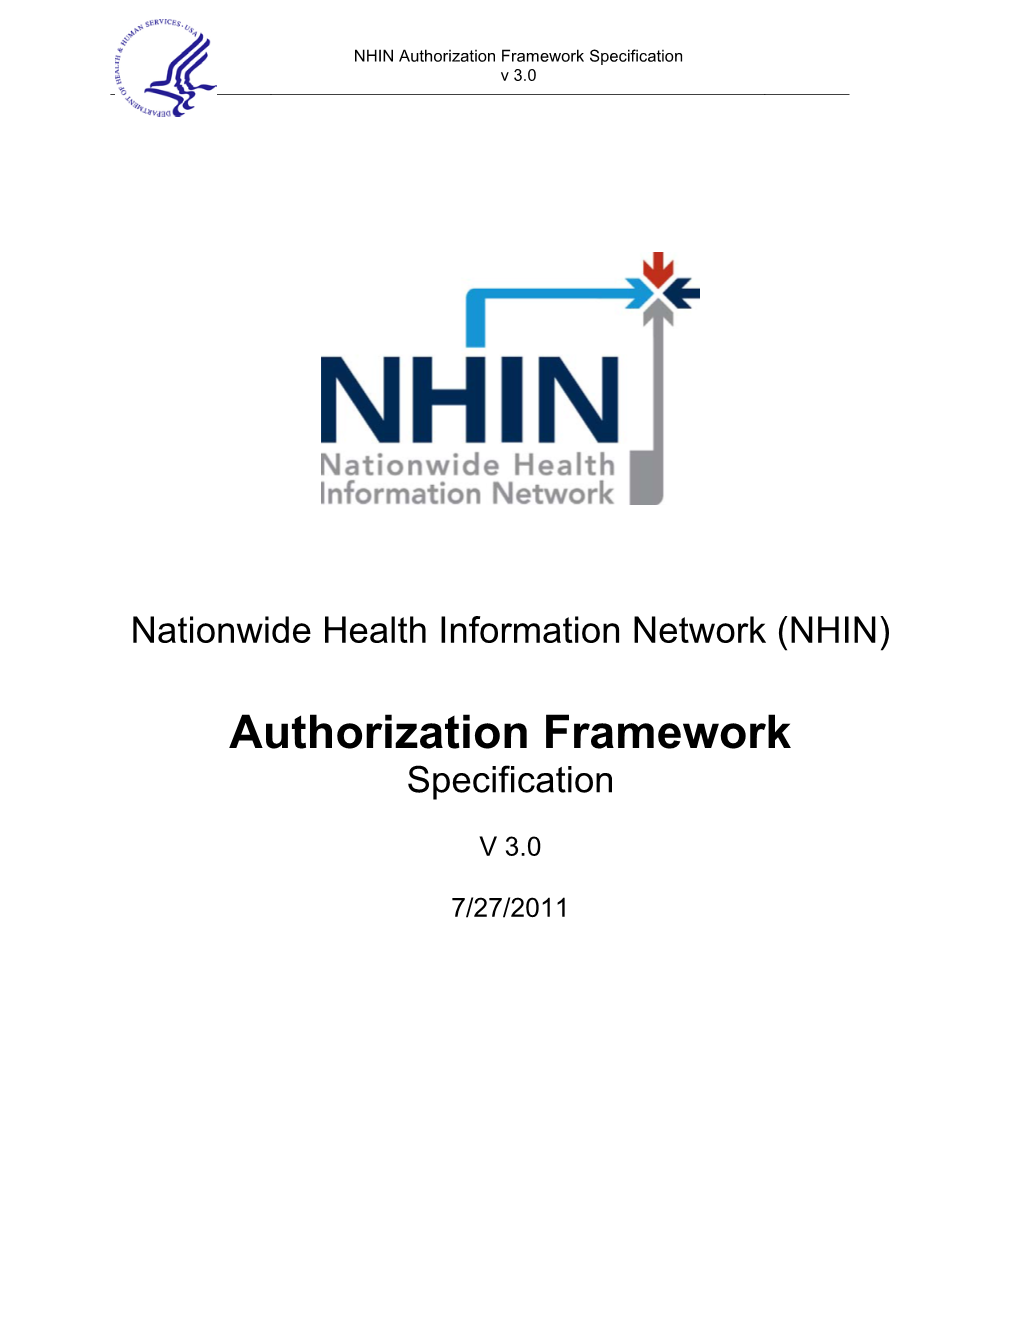 NHIN Authorization Framework Specification